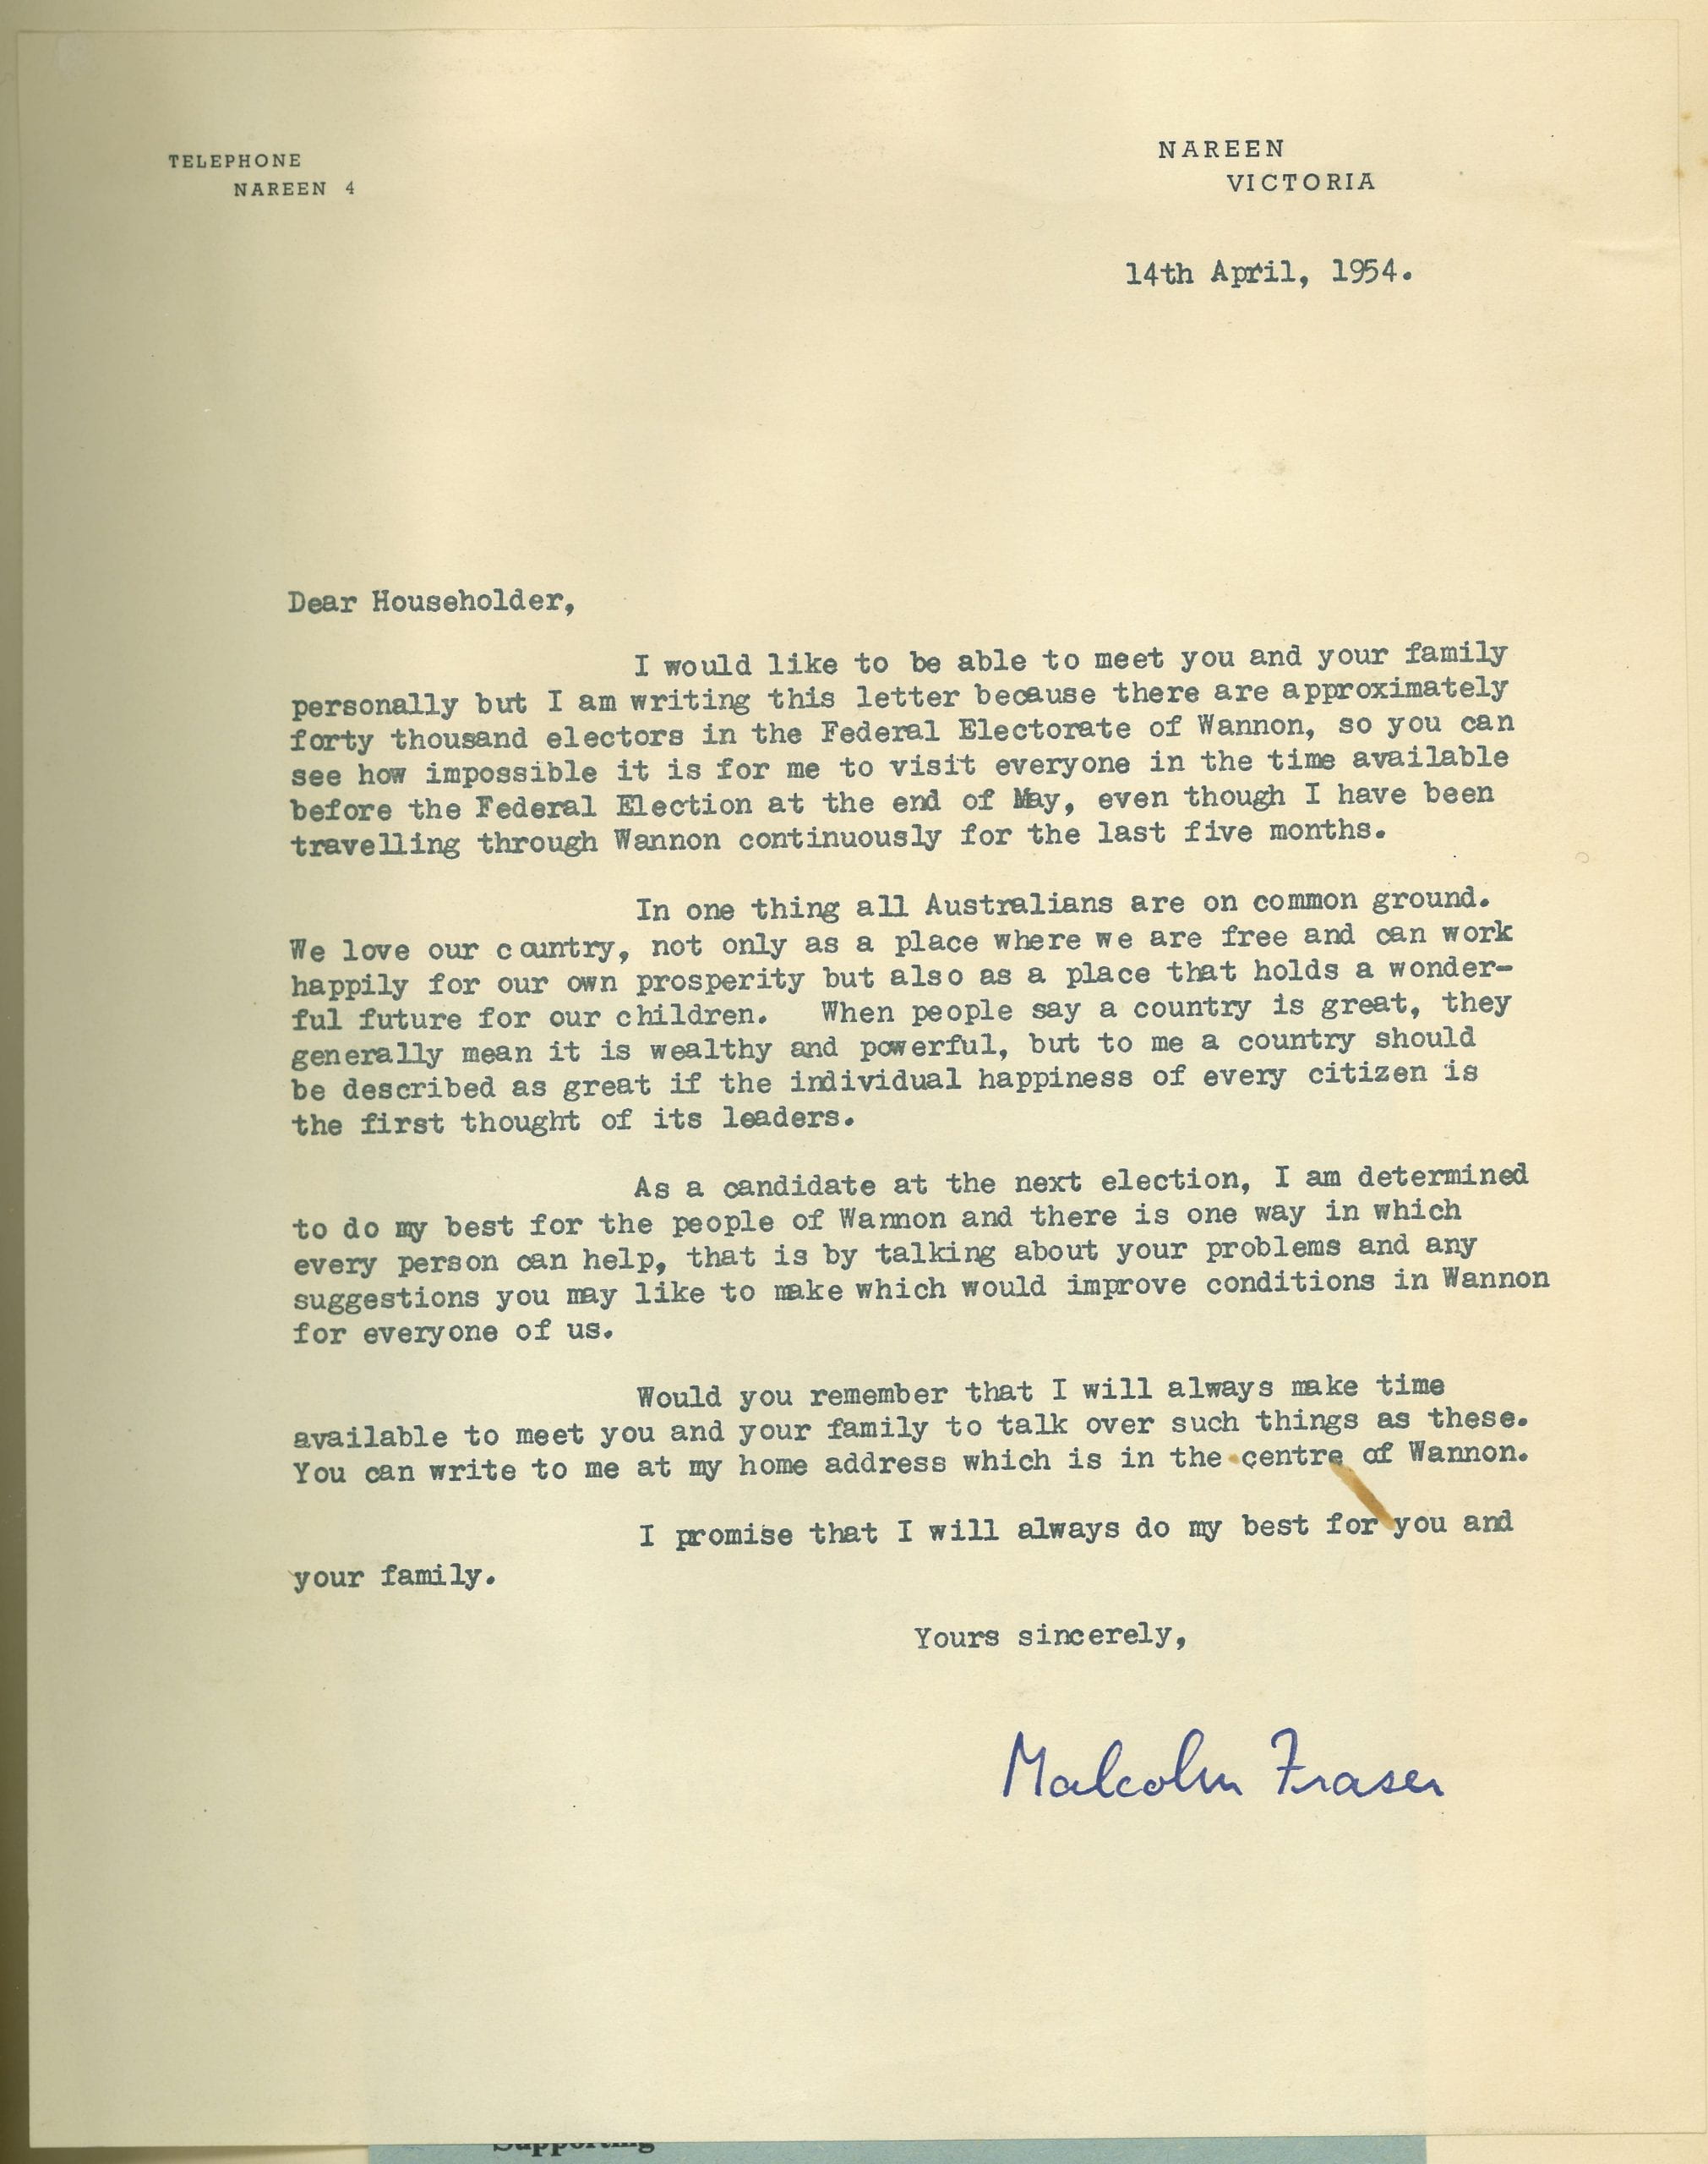 Electorate letter from Malcolm Fraser, 14 April, 1954